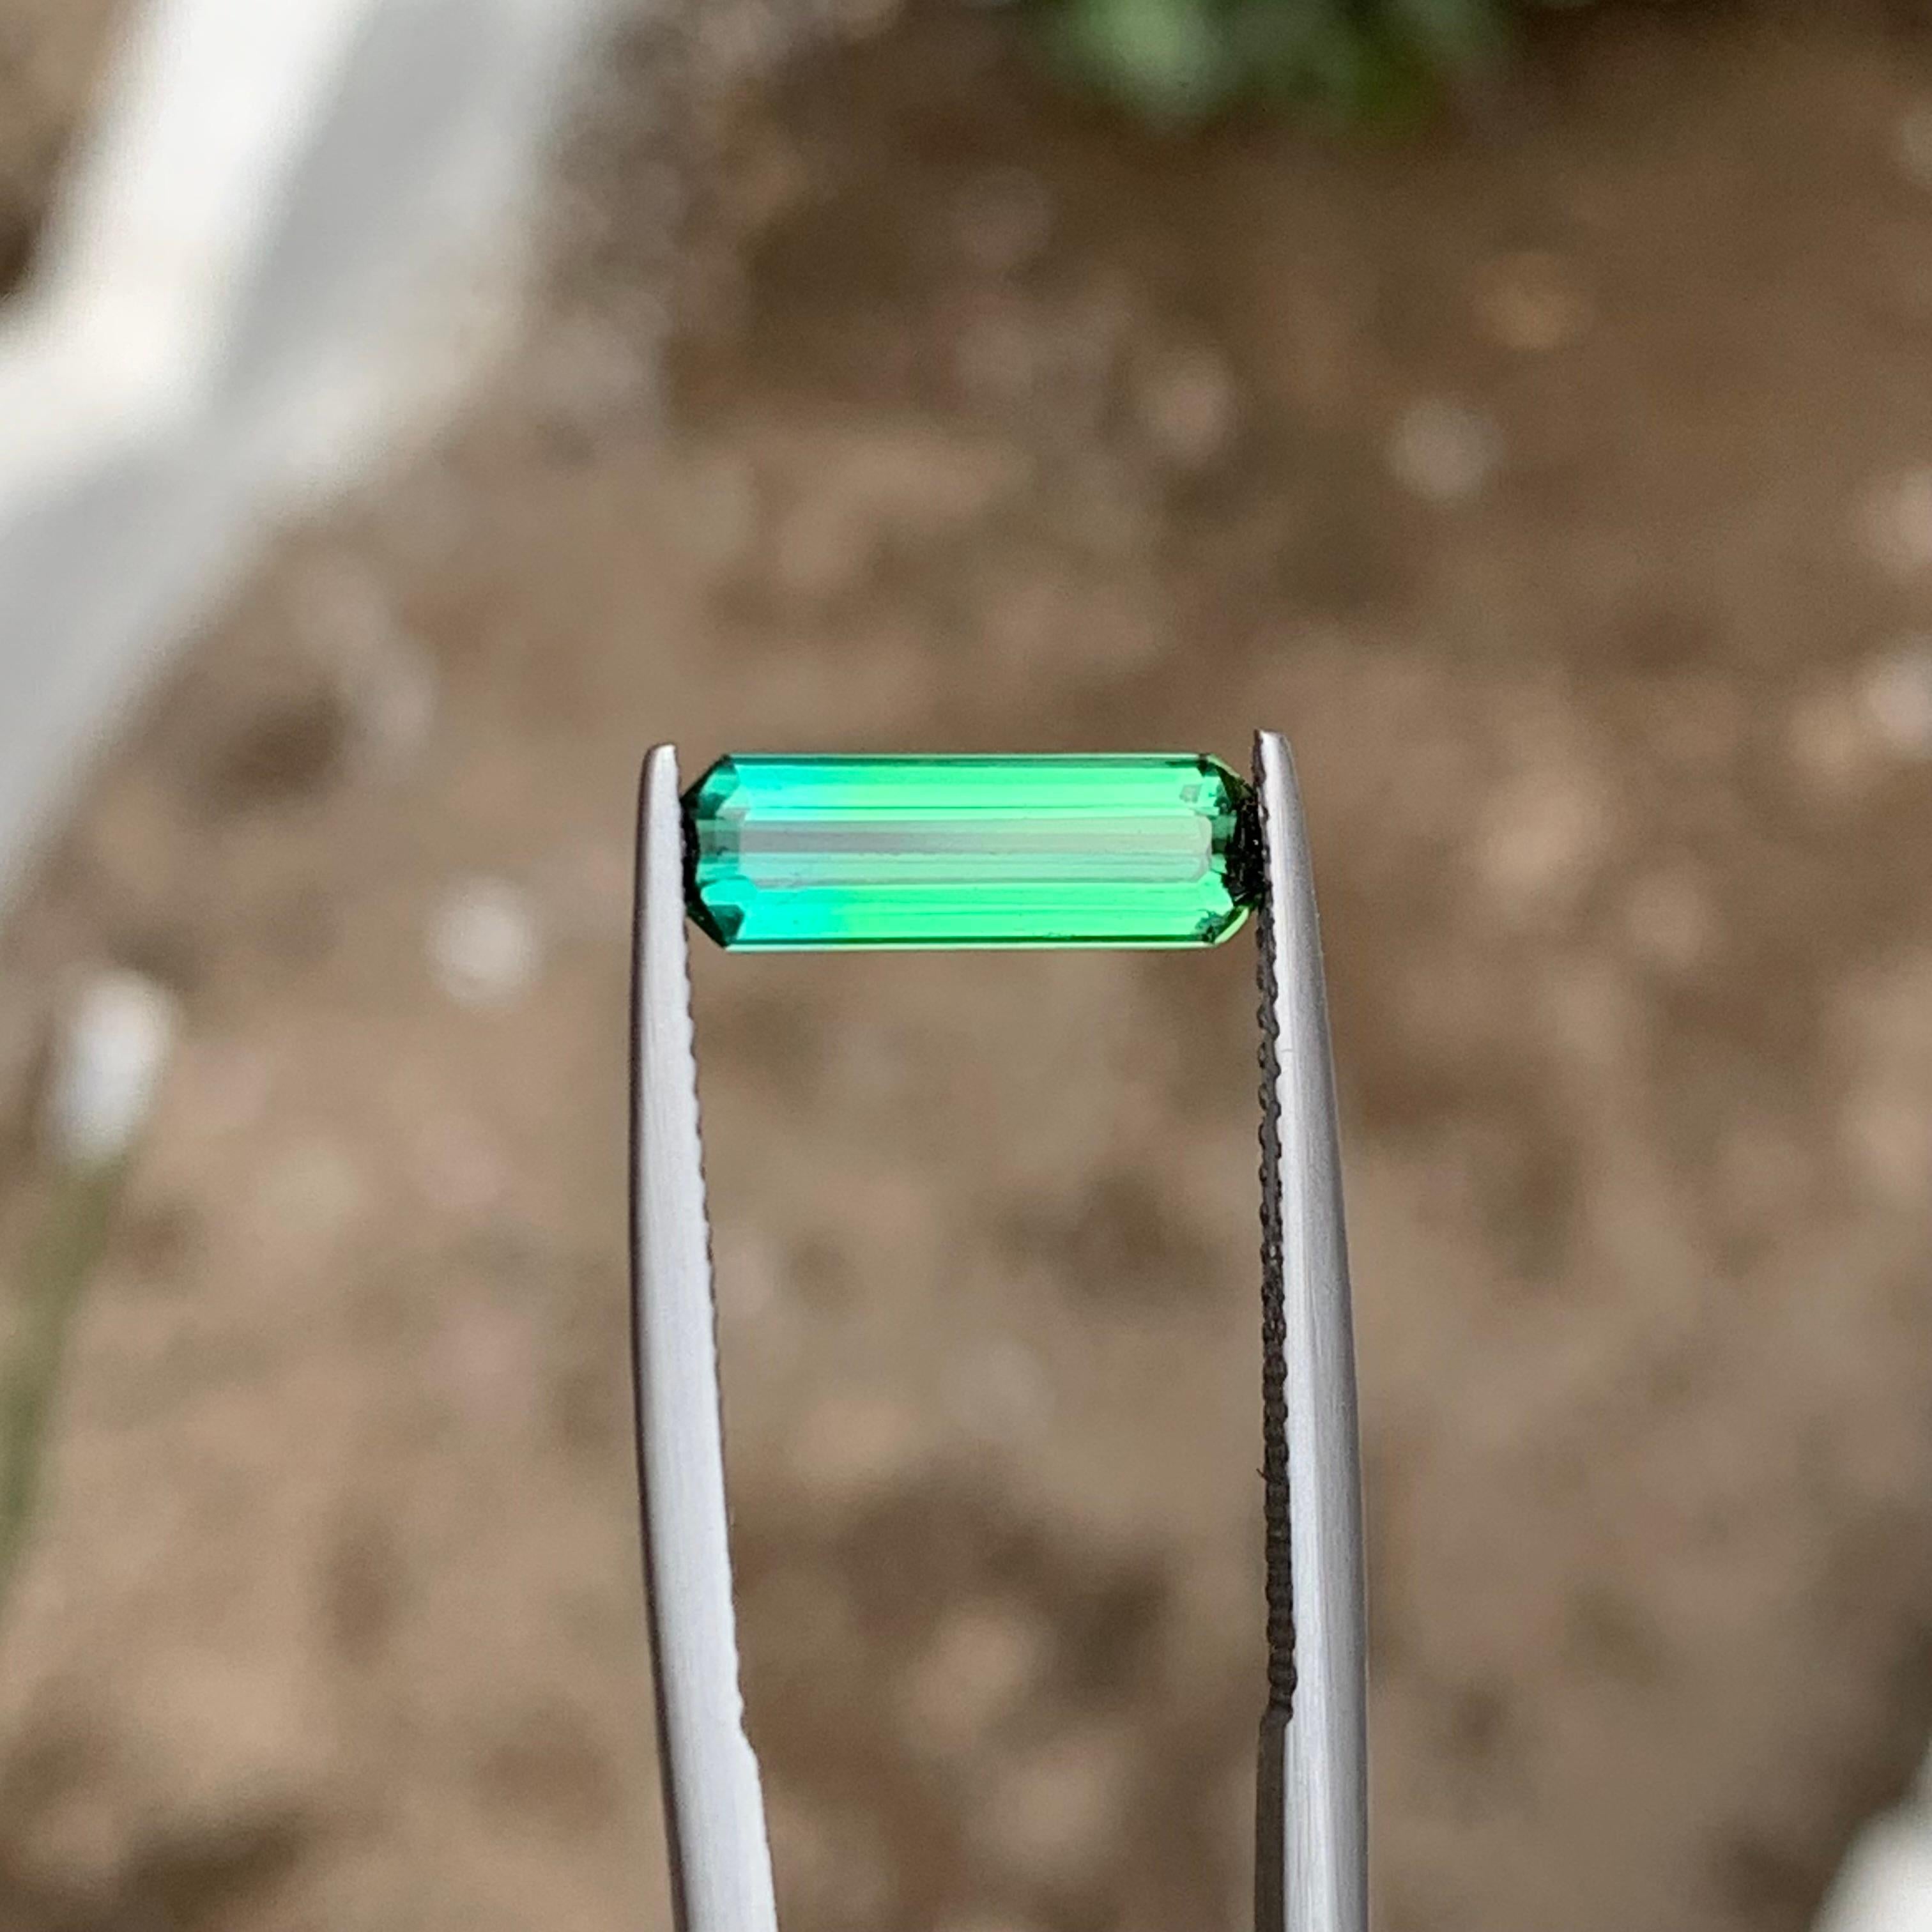 Rare Vivid Neon Green & Light Neon Blue Bicolor Tourmaline Gemstone, 1.5 Ct-Ring For Sale 1